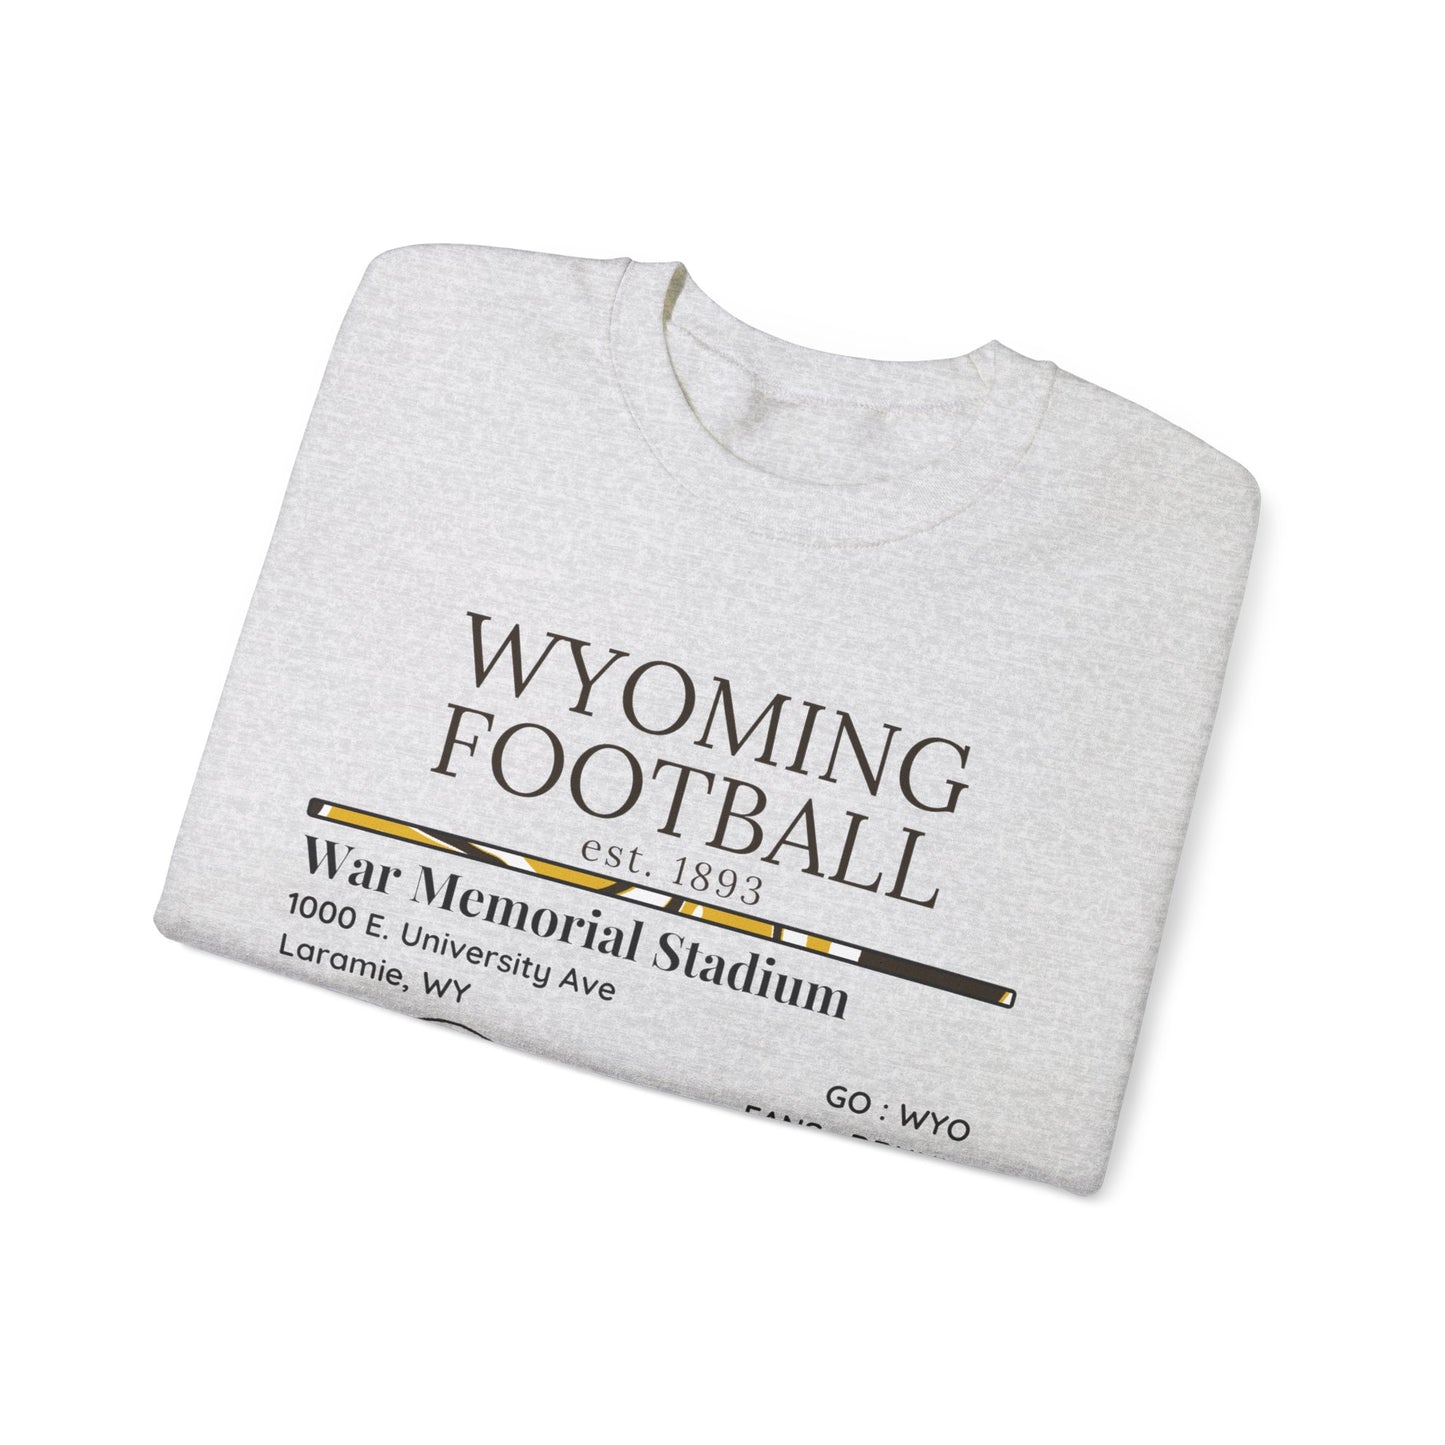 Wyoming Football Sweatshirt